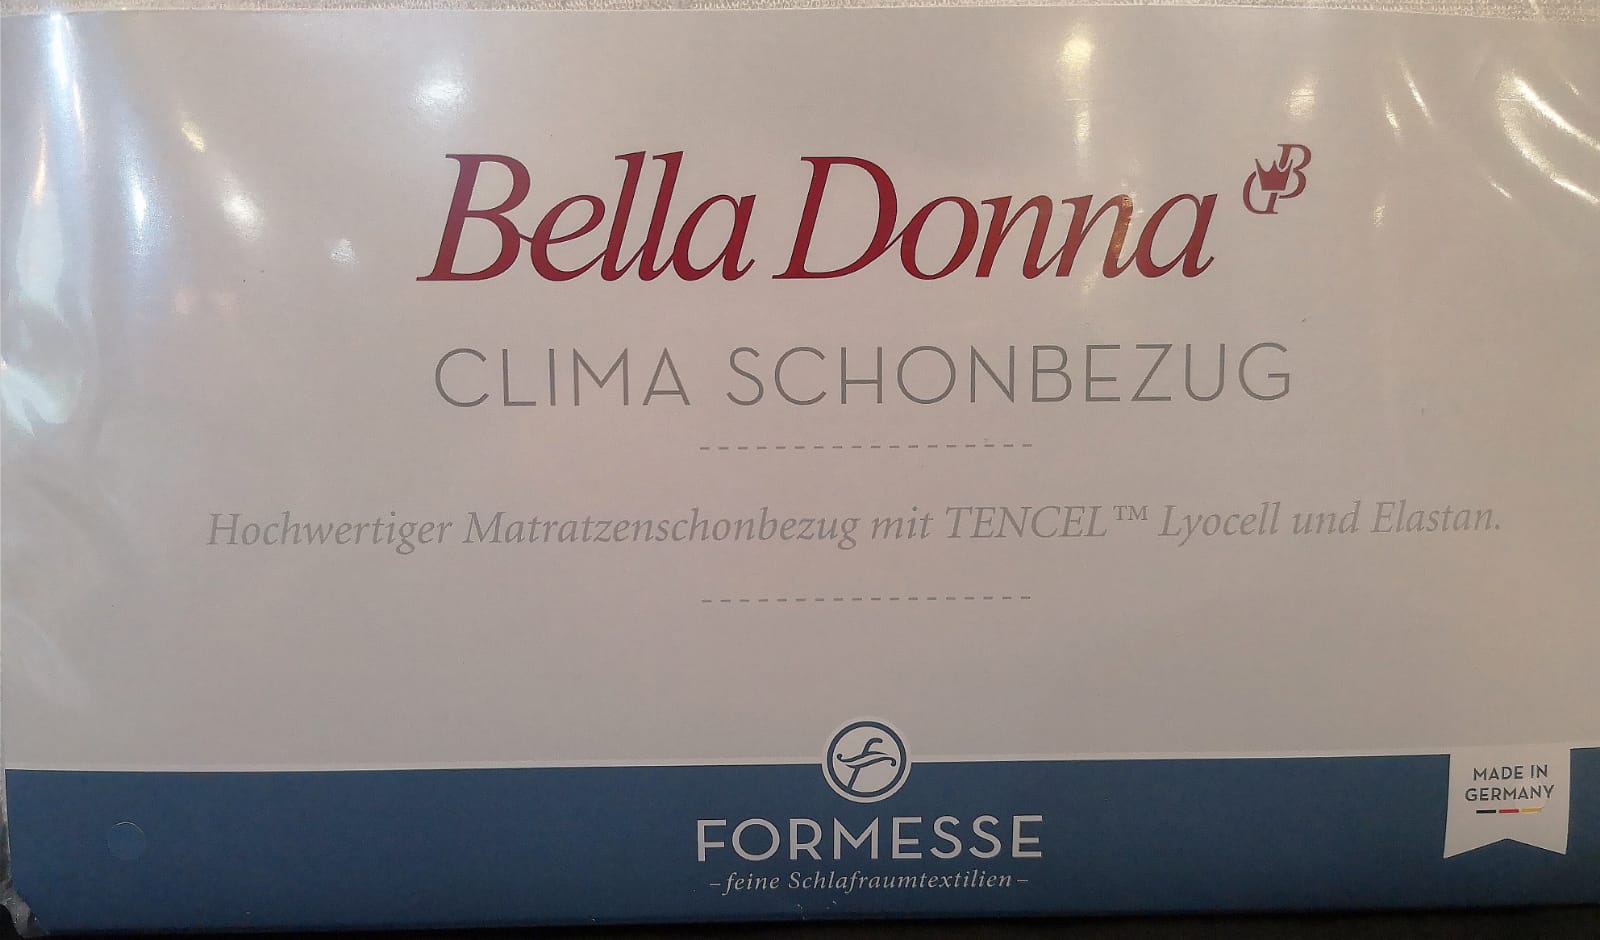 Bella Donna Clima Schonbezug 180x200 - 200x220 cm 